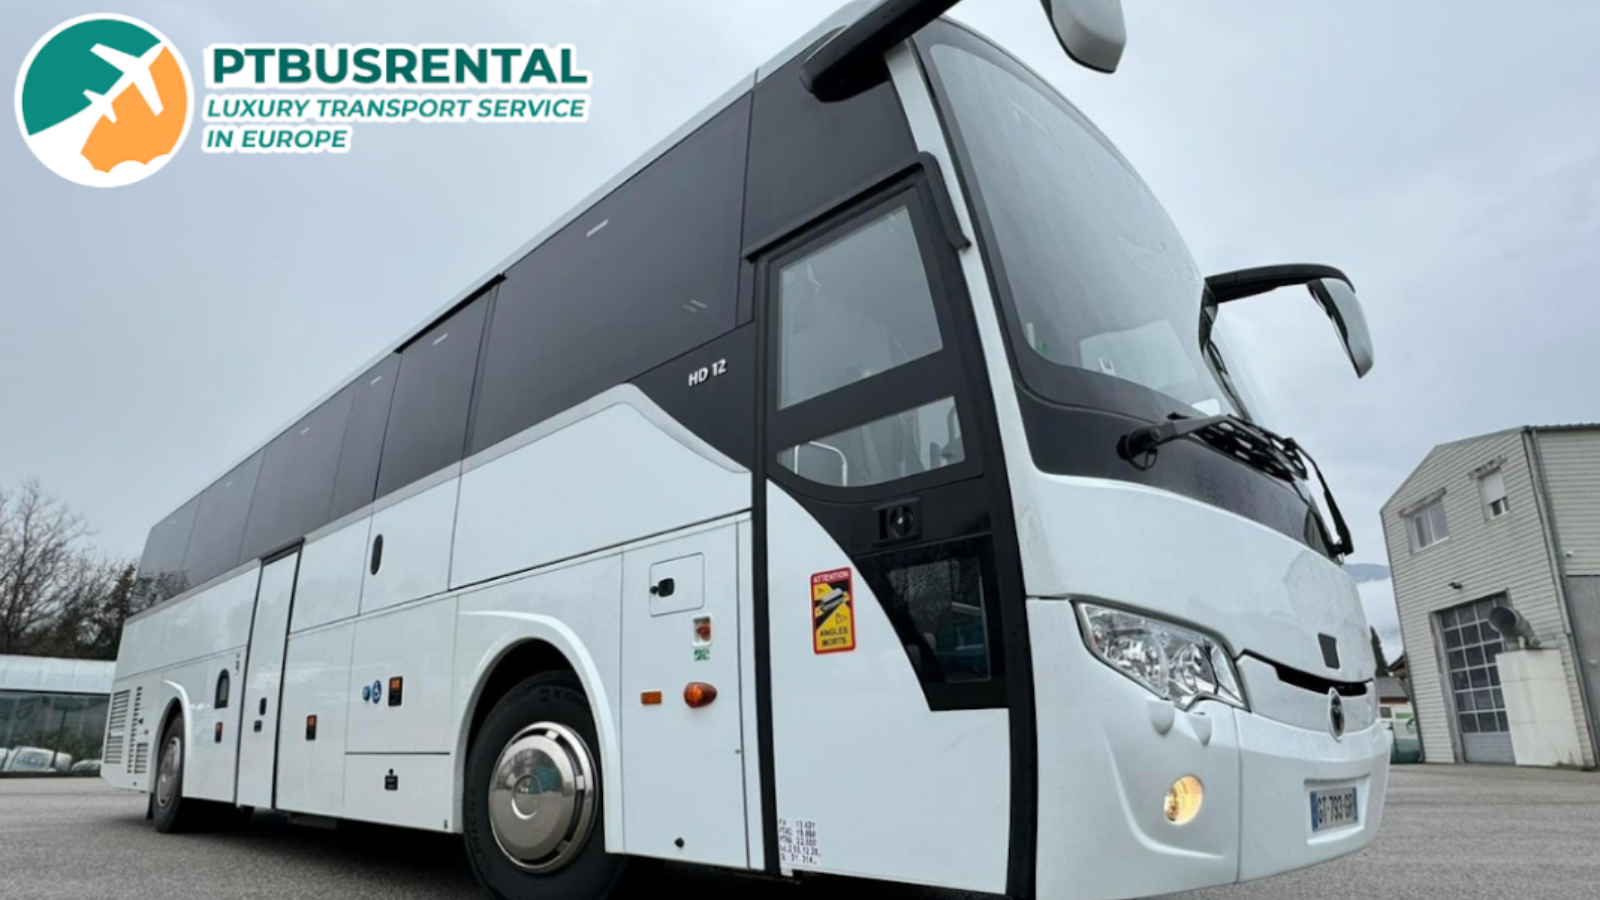 Bus rental in Edinburgh in 2 days with PTBusrental